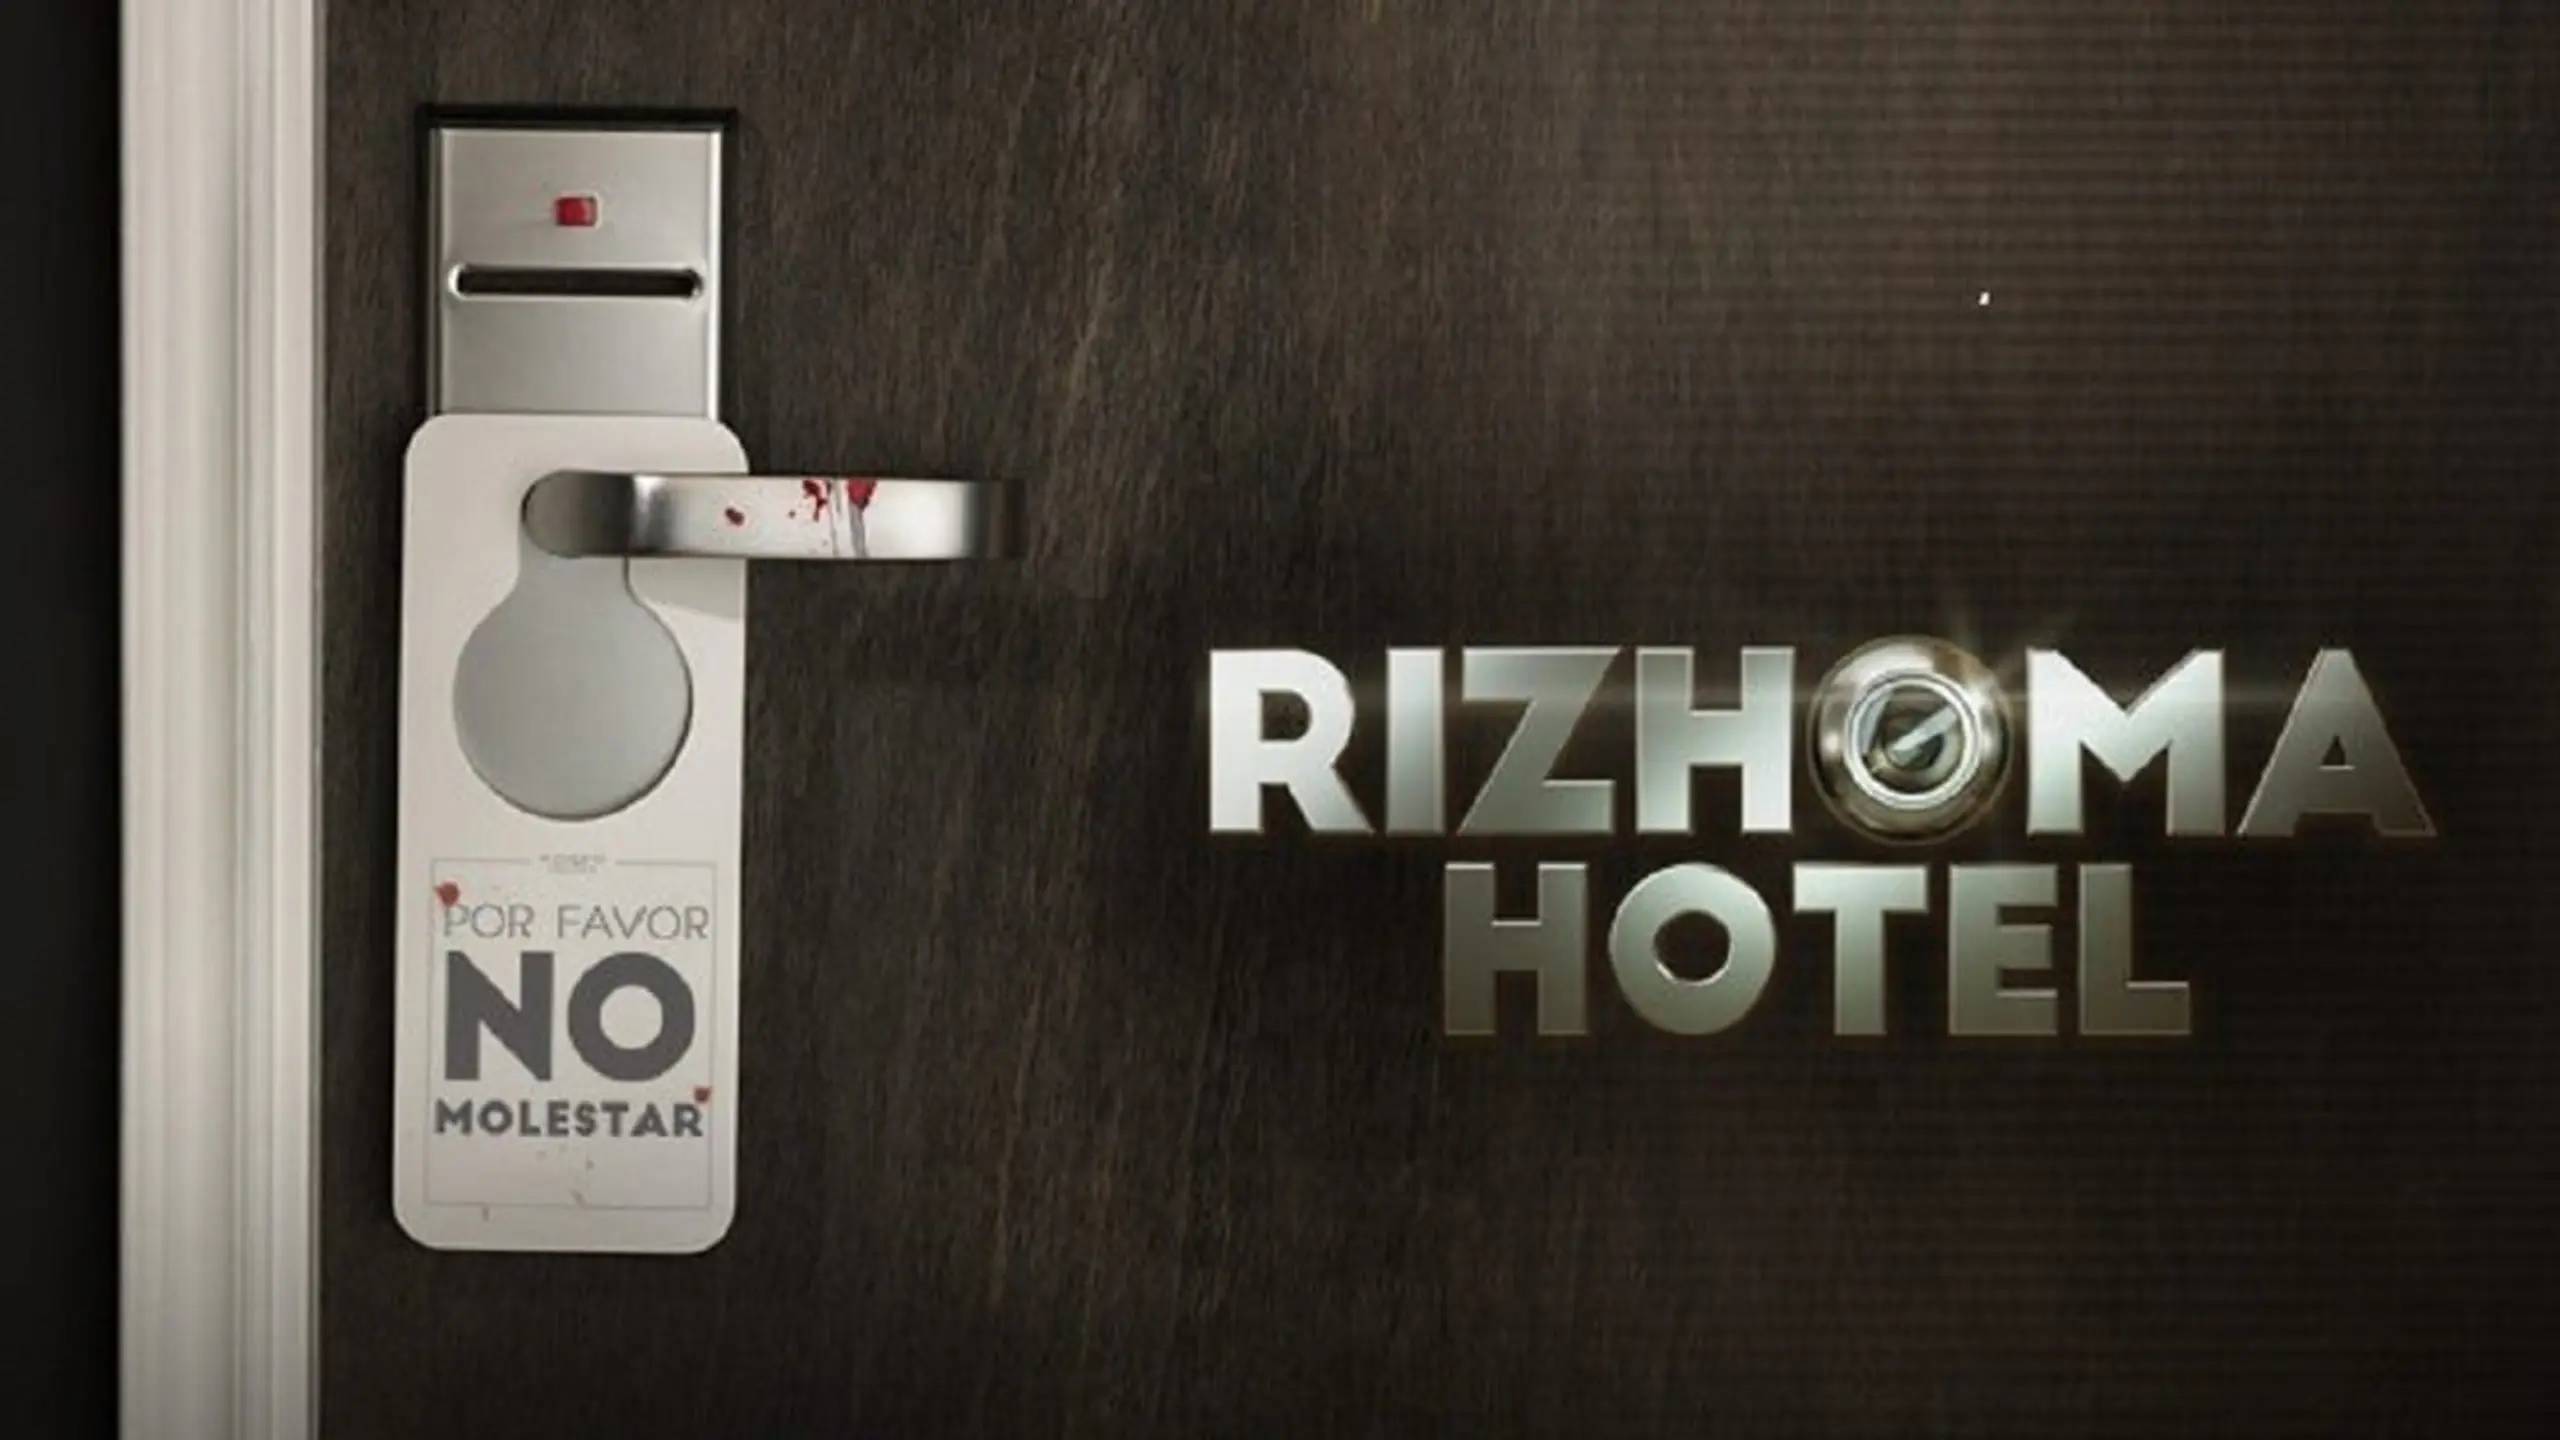 Rizhoma Hotel